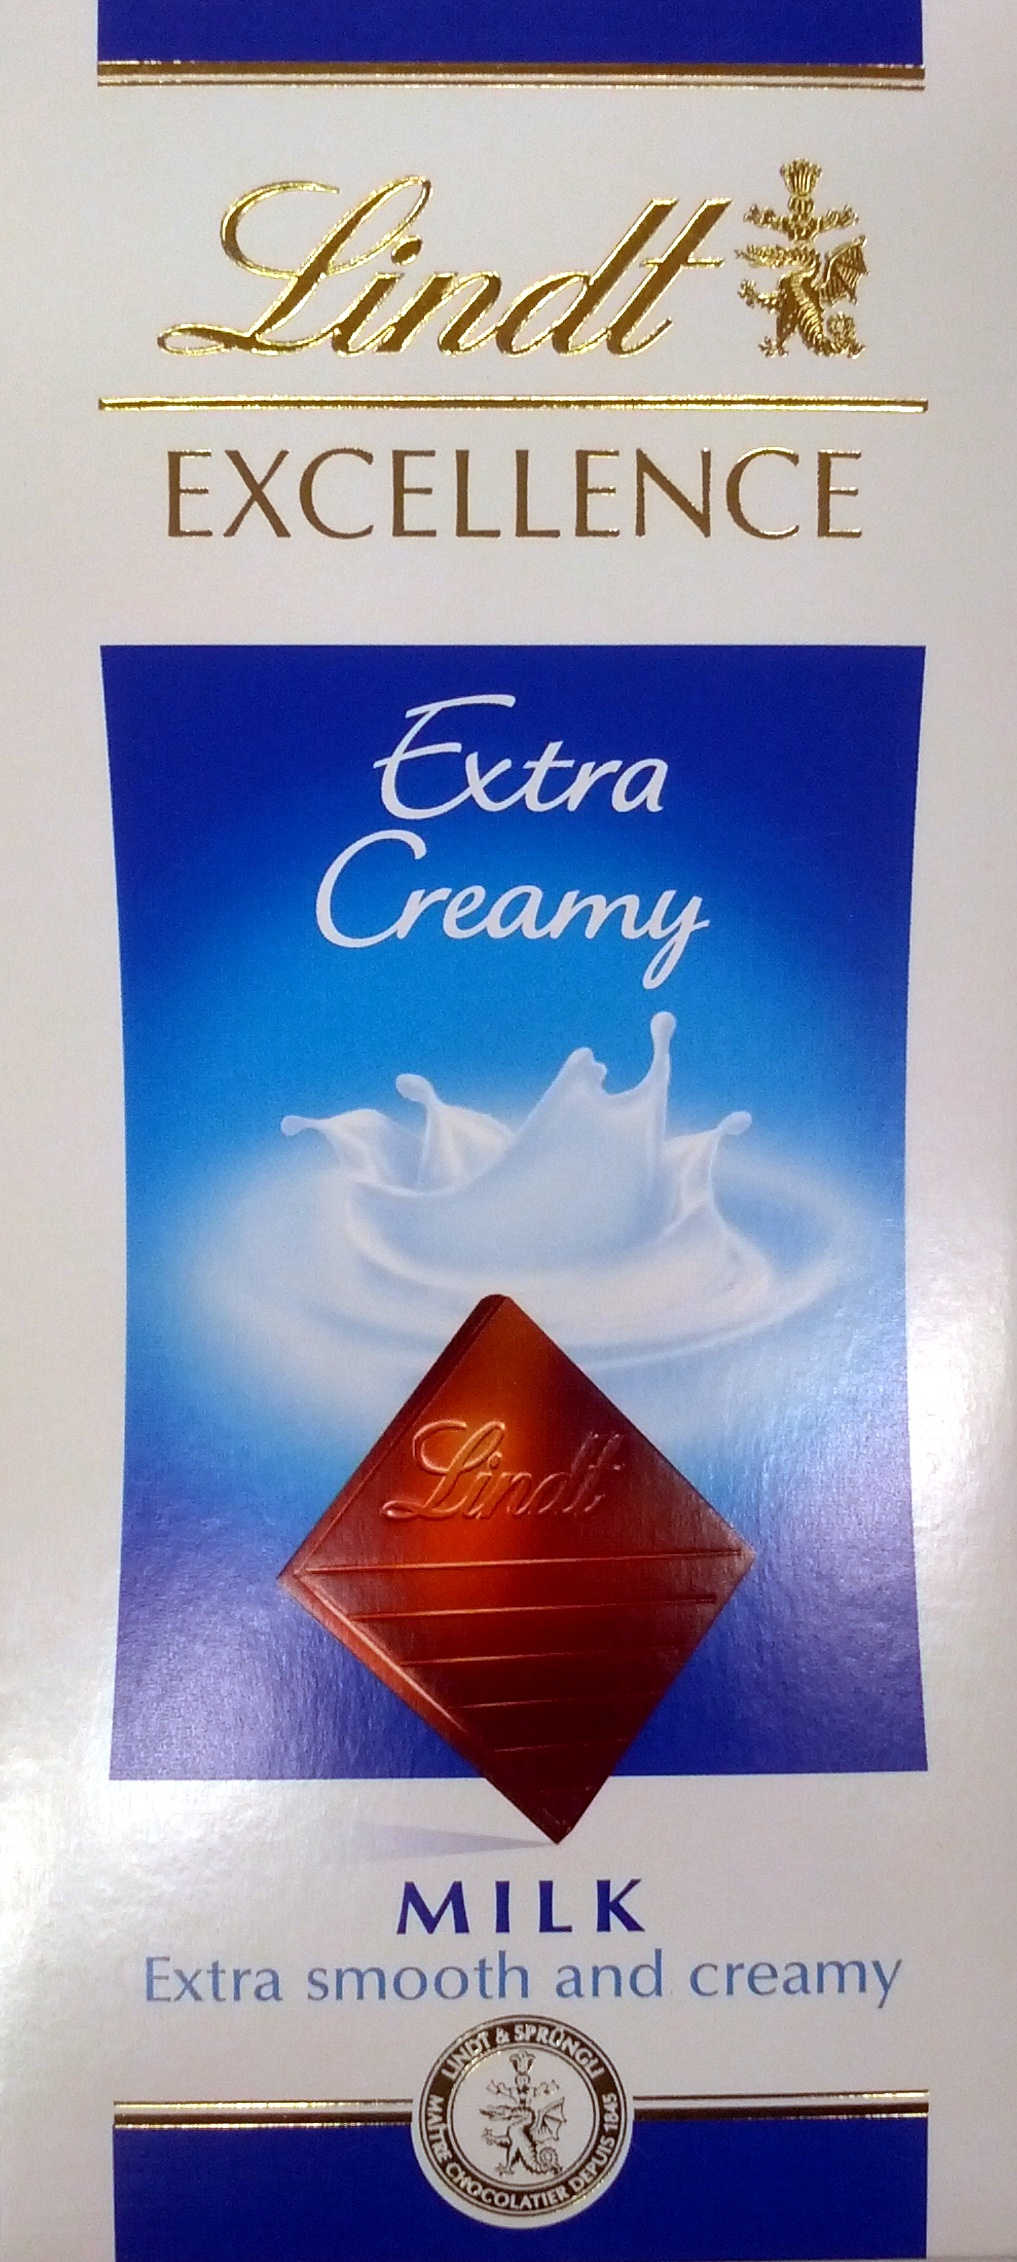 Excellence Extra Creamy Milk - Produit